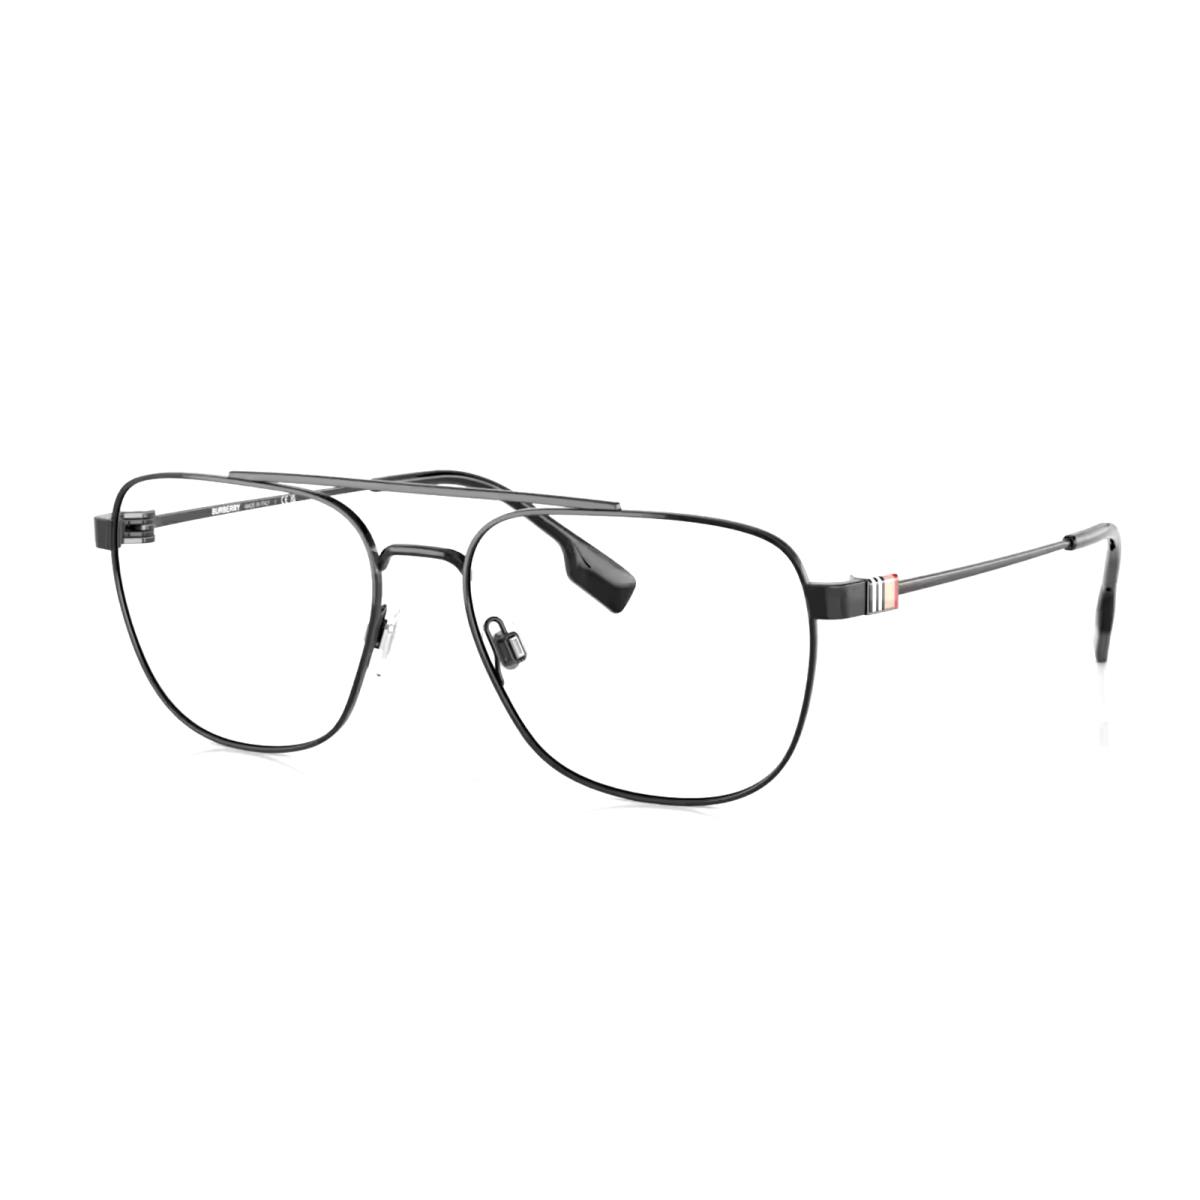 Burberry Michael Eyeglasses B 1377 1001 57-17 145 Black Aviator Frames